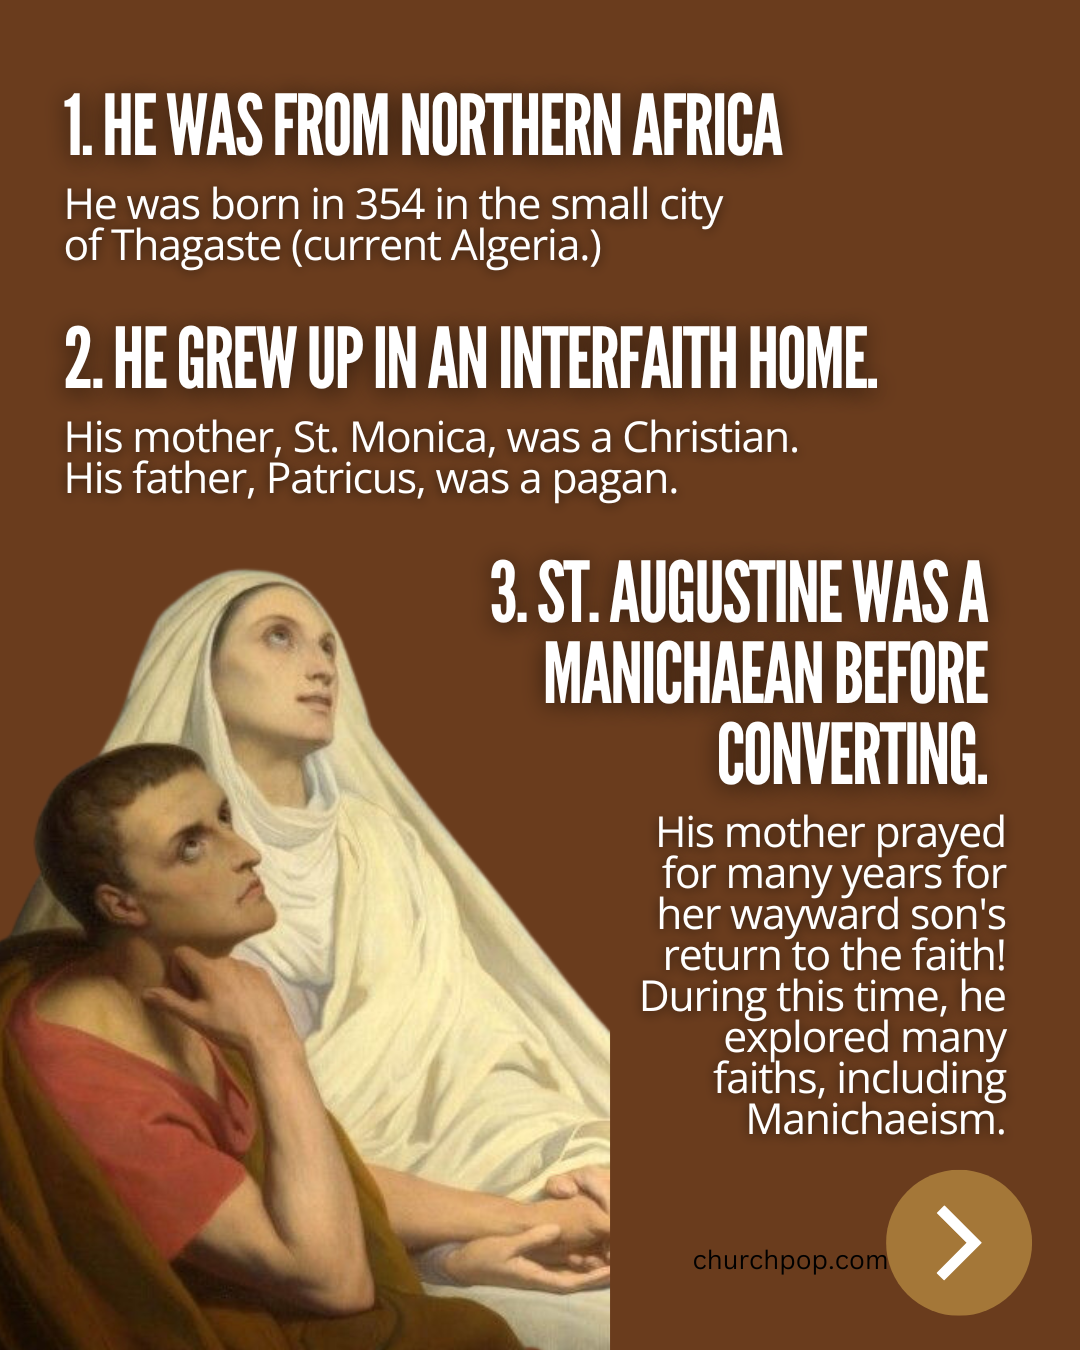 What did Saint Augustine do?